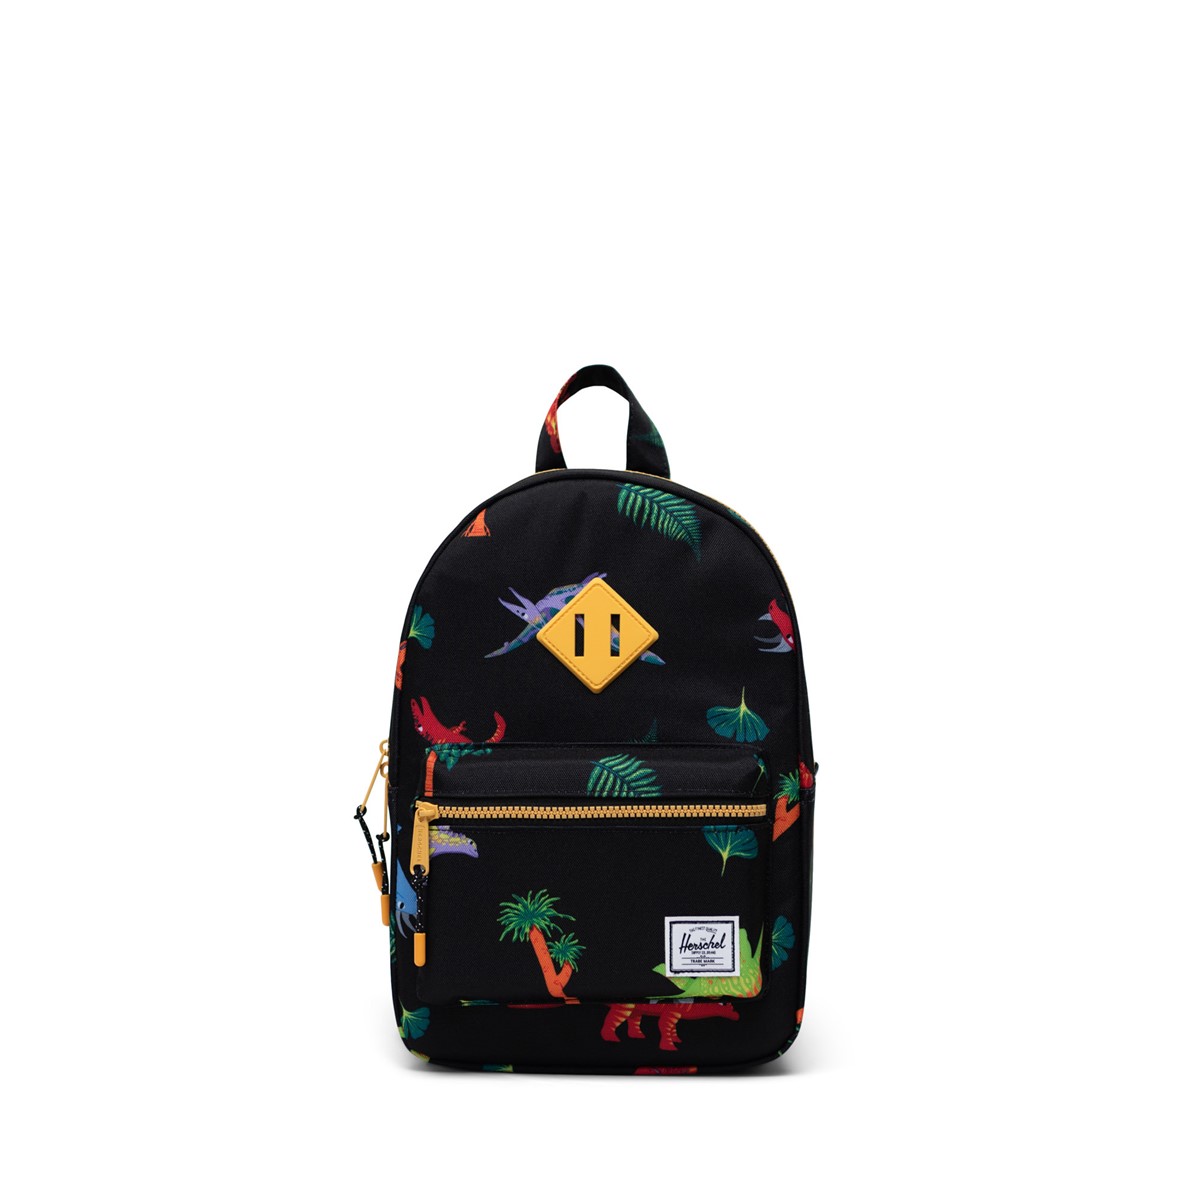 Kids' Heritage Backpack in Black/Green/Yellow